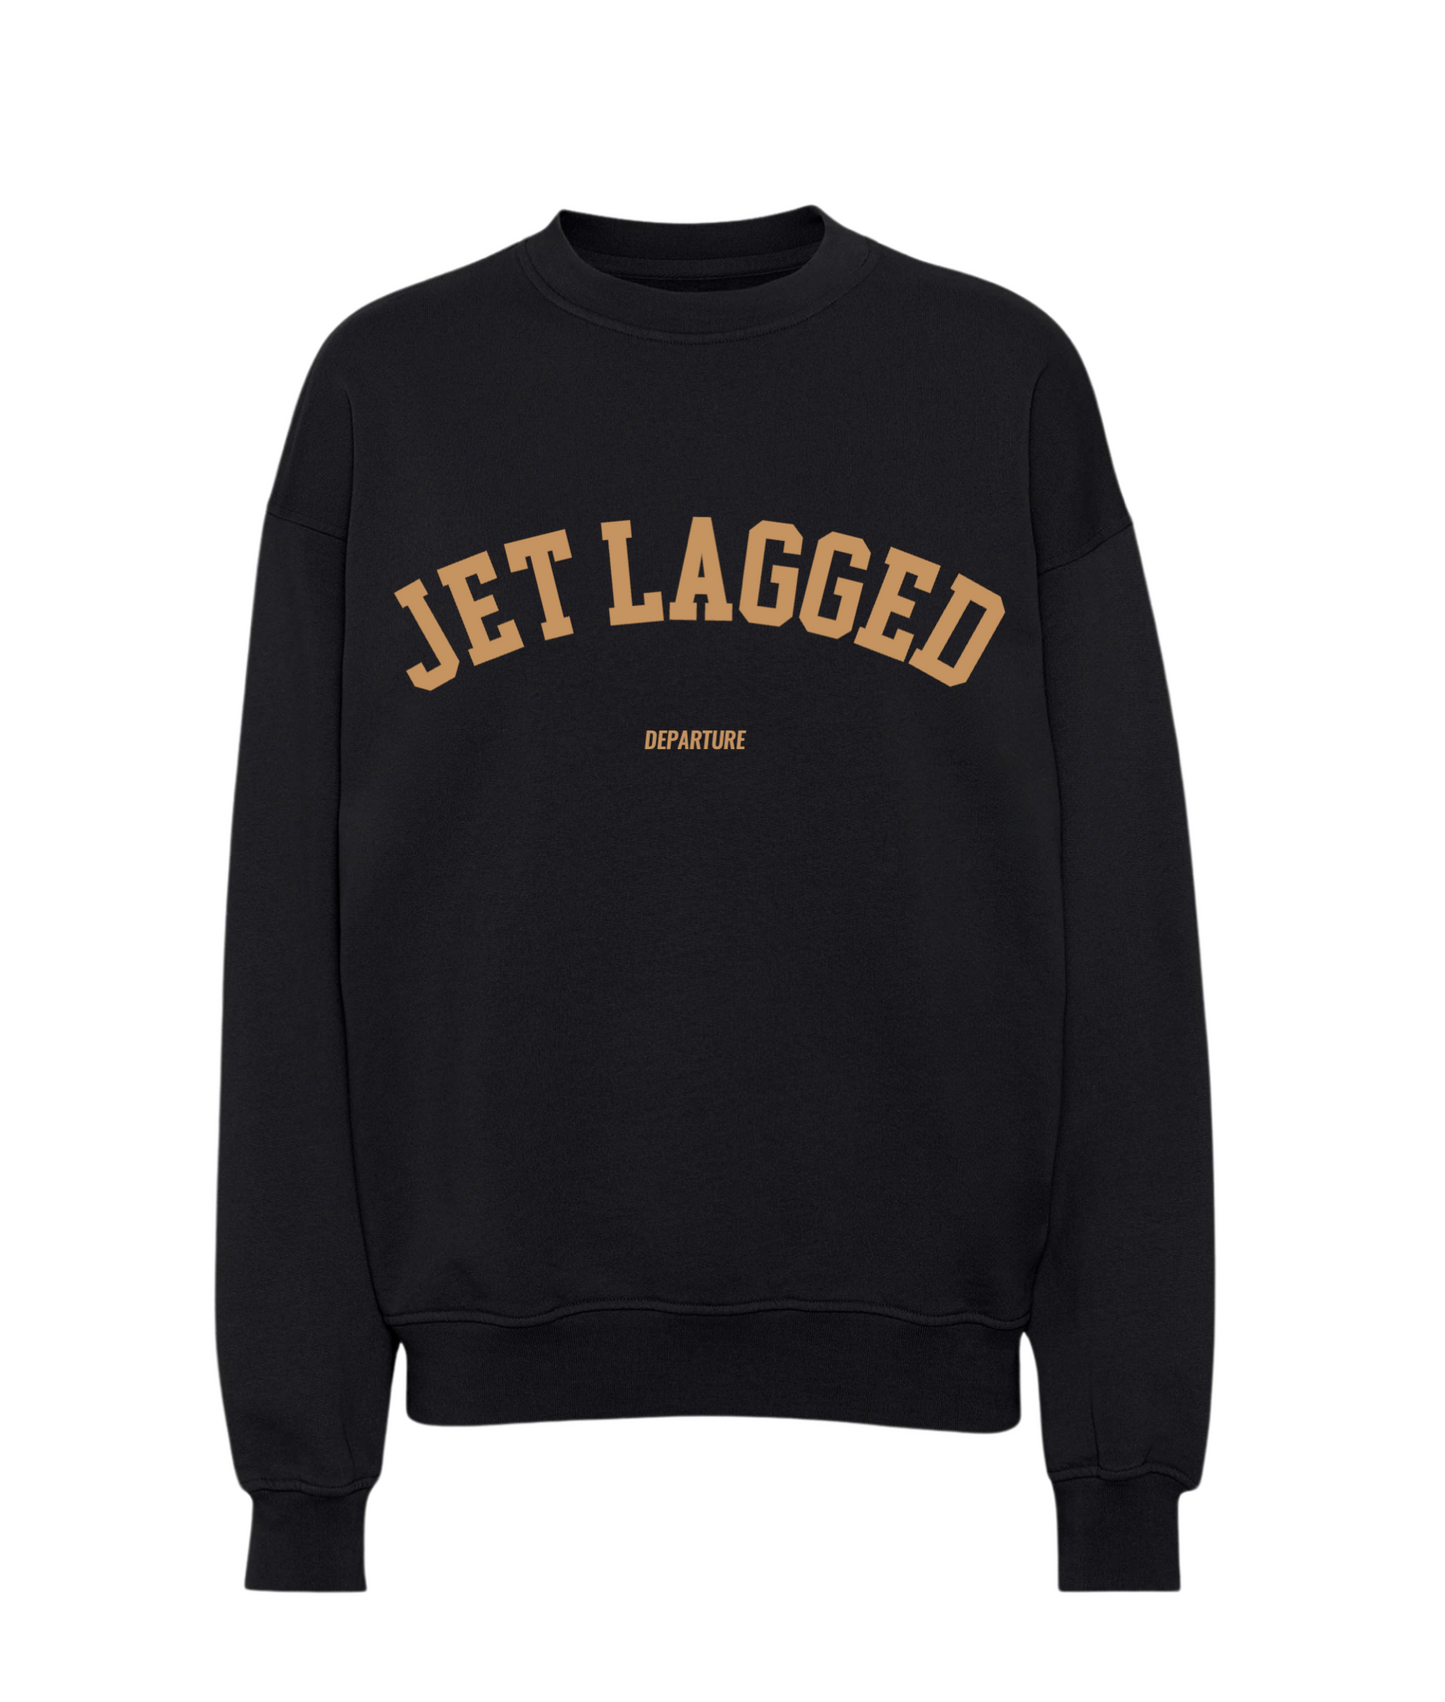 Jet Lagged Sweatshirt